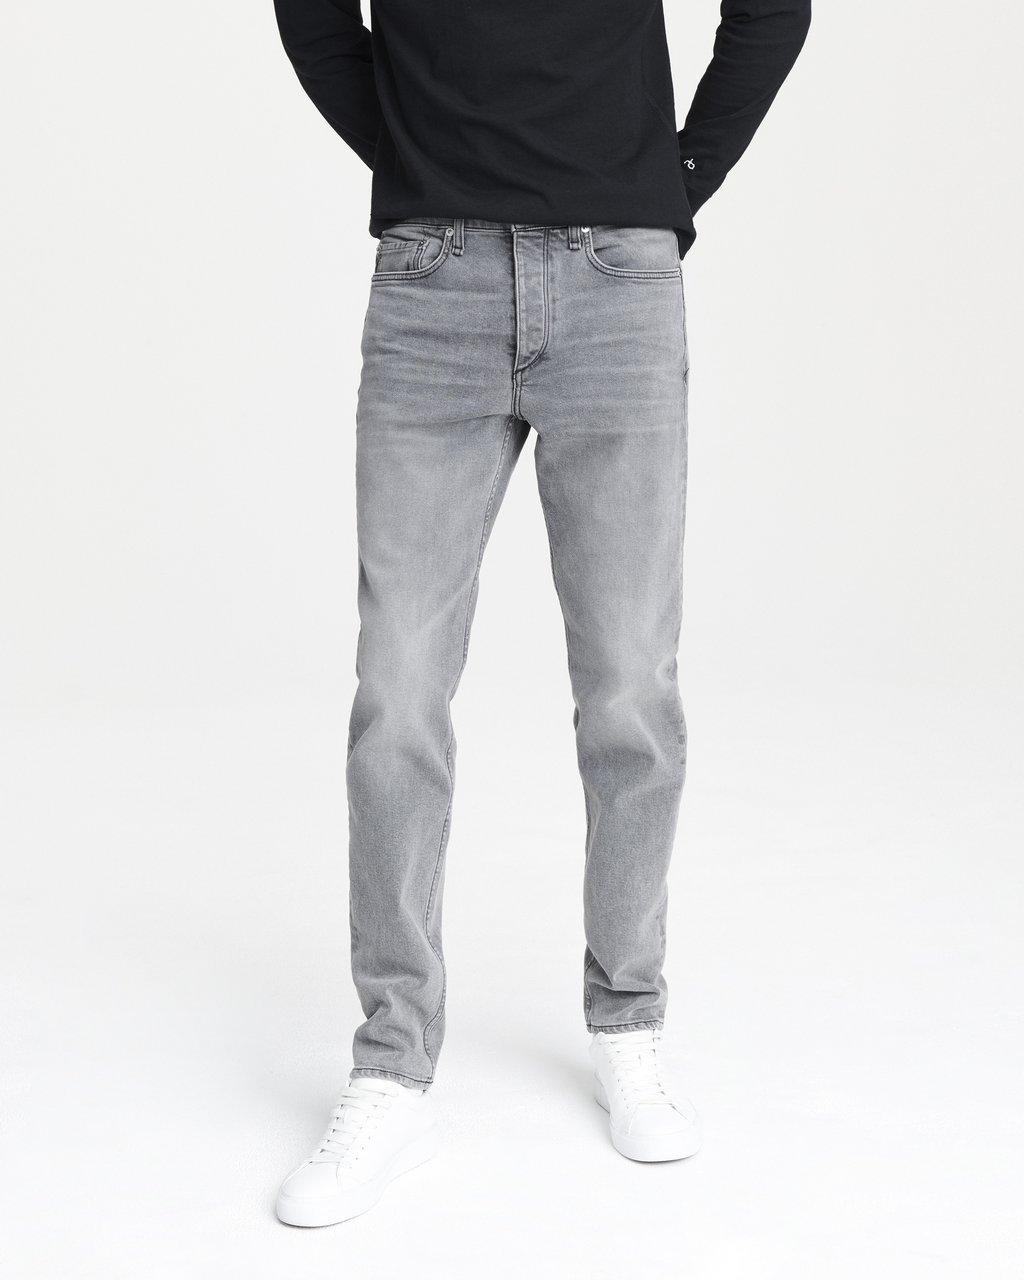 Fit 2 Jeans for Men in Greyson | rag & bone